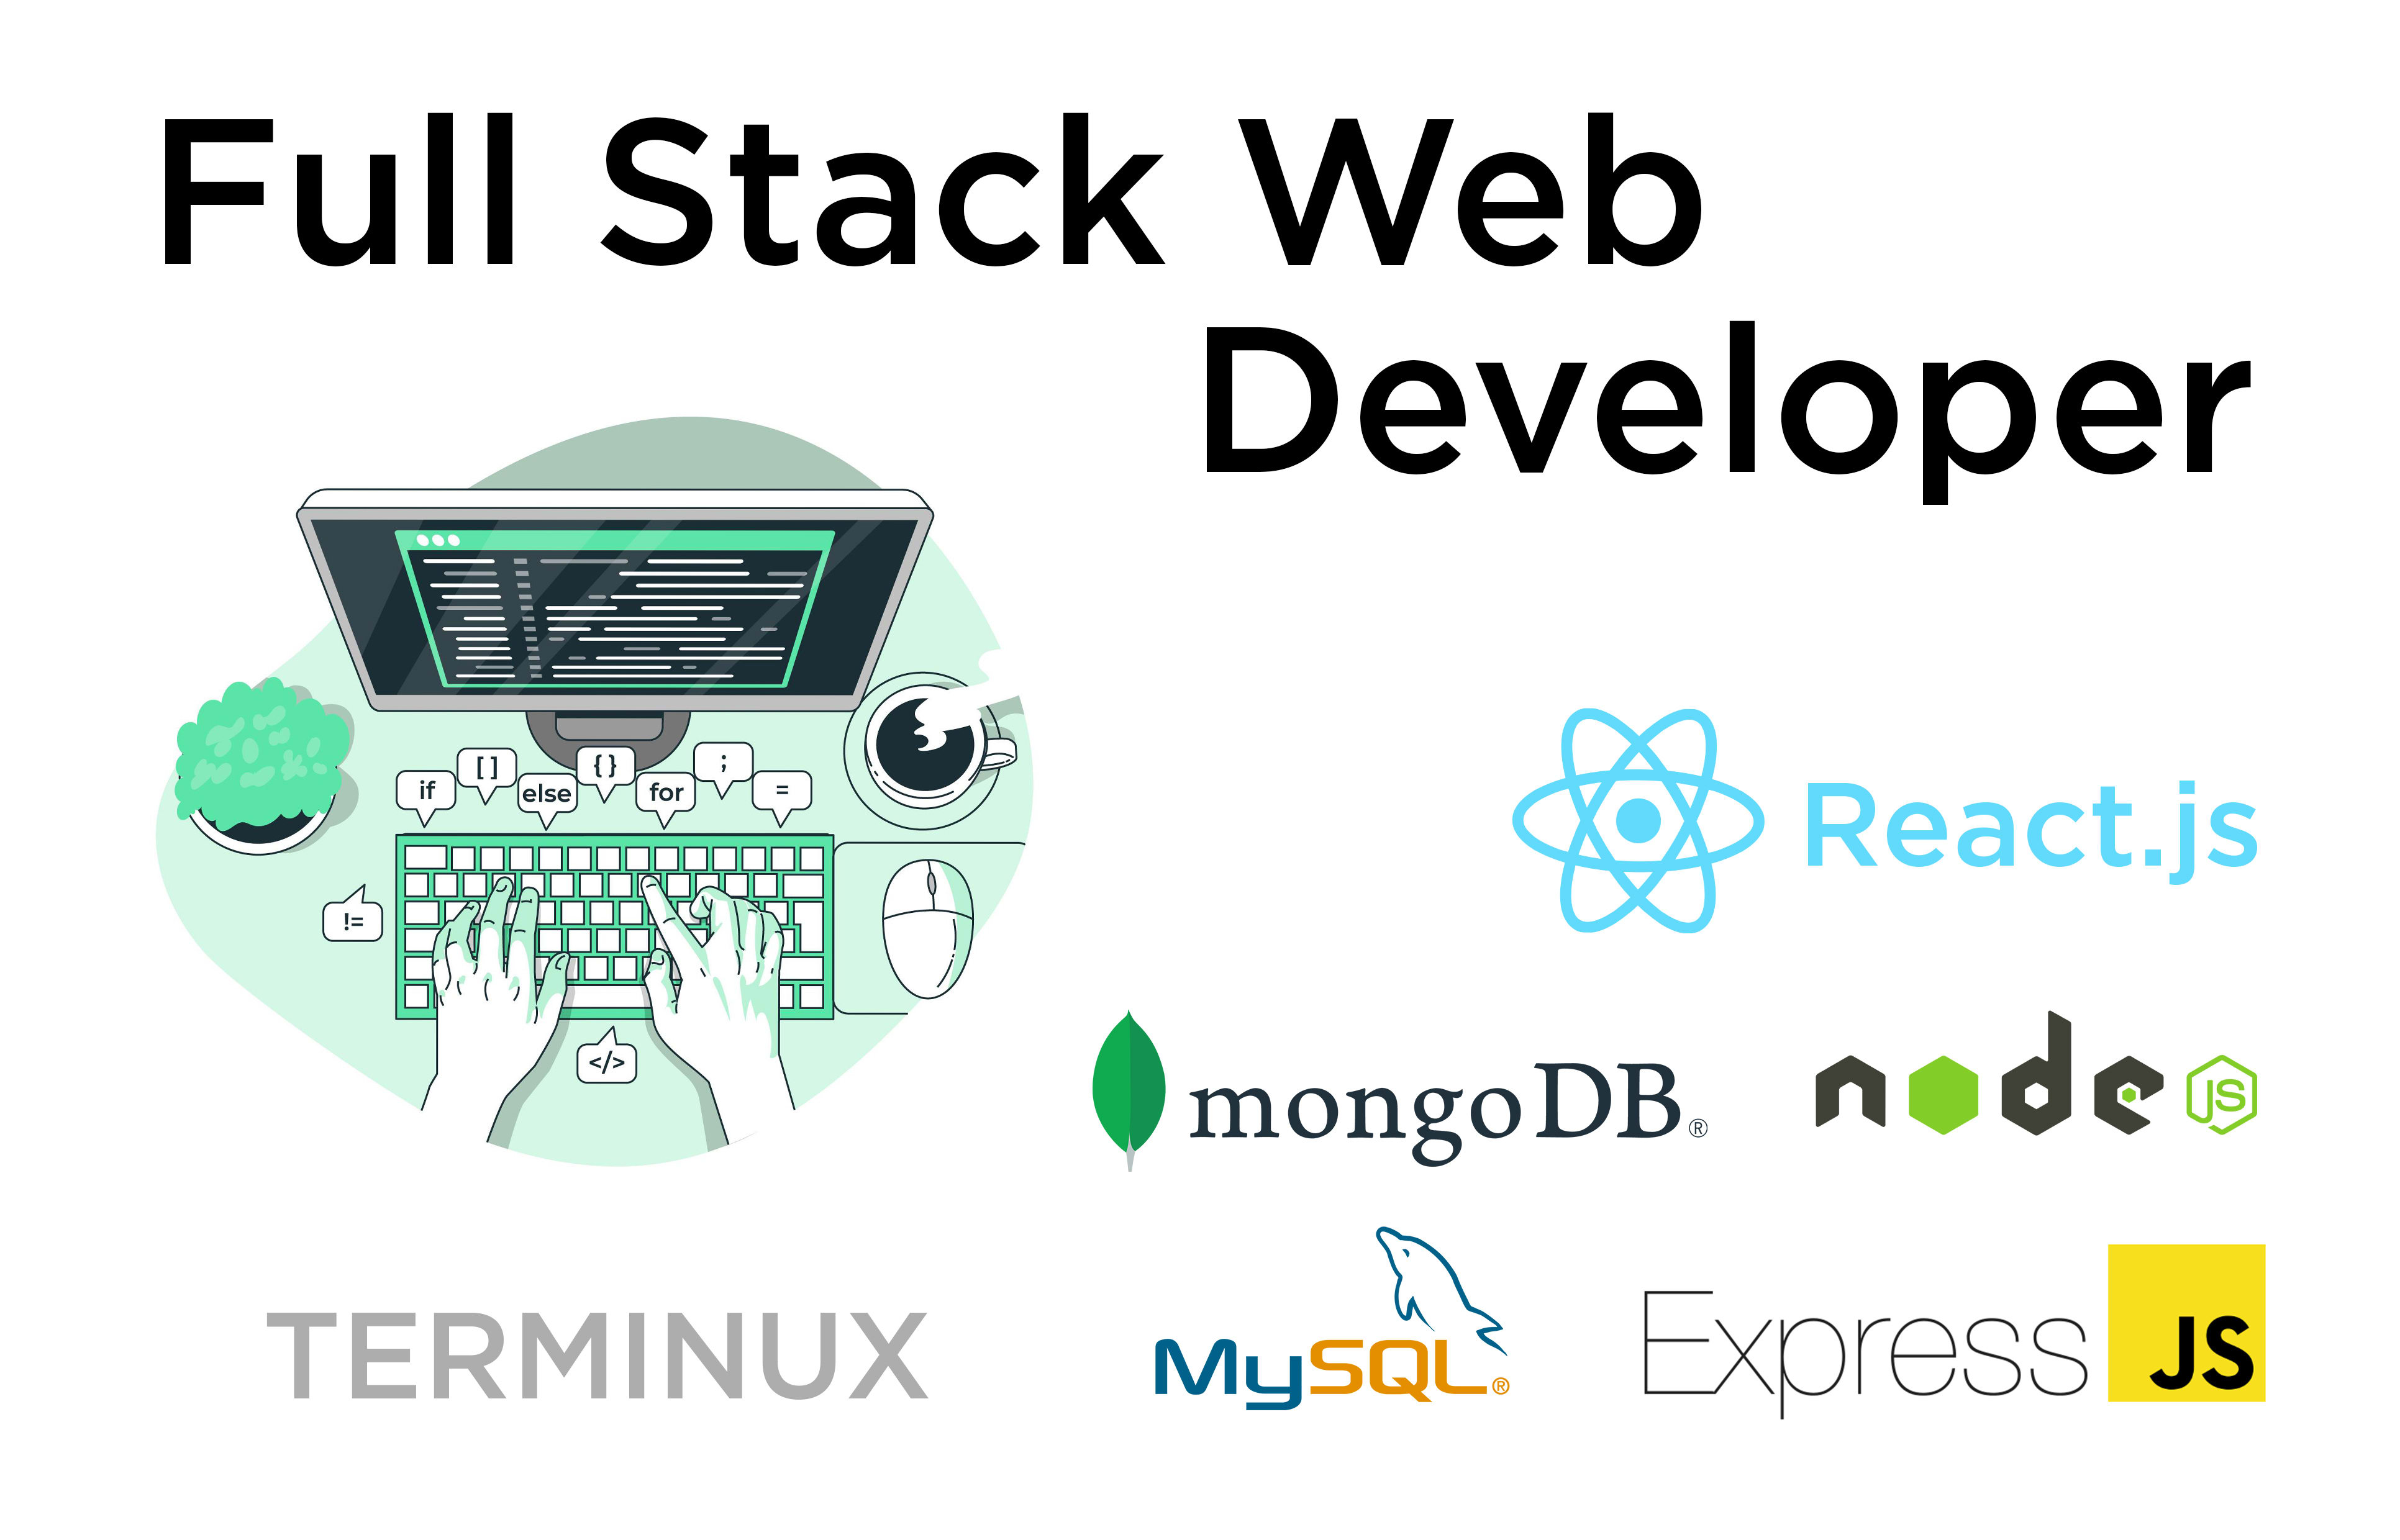 Be your full stack web developer react js node js express js by Terminux |  Fiverr